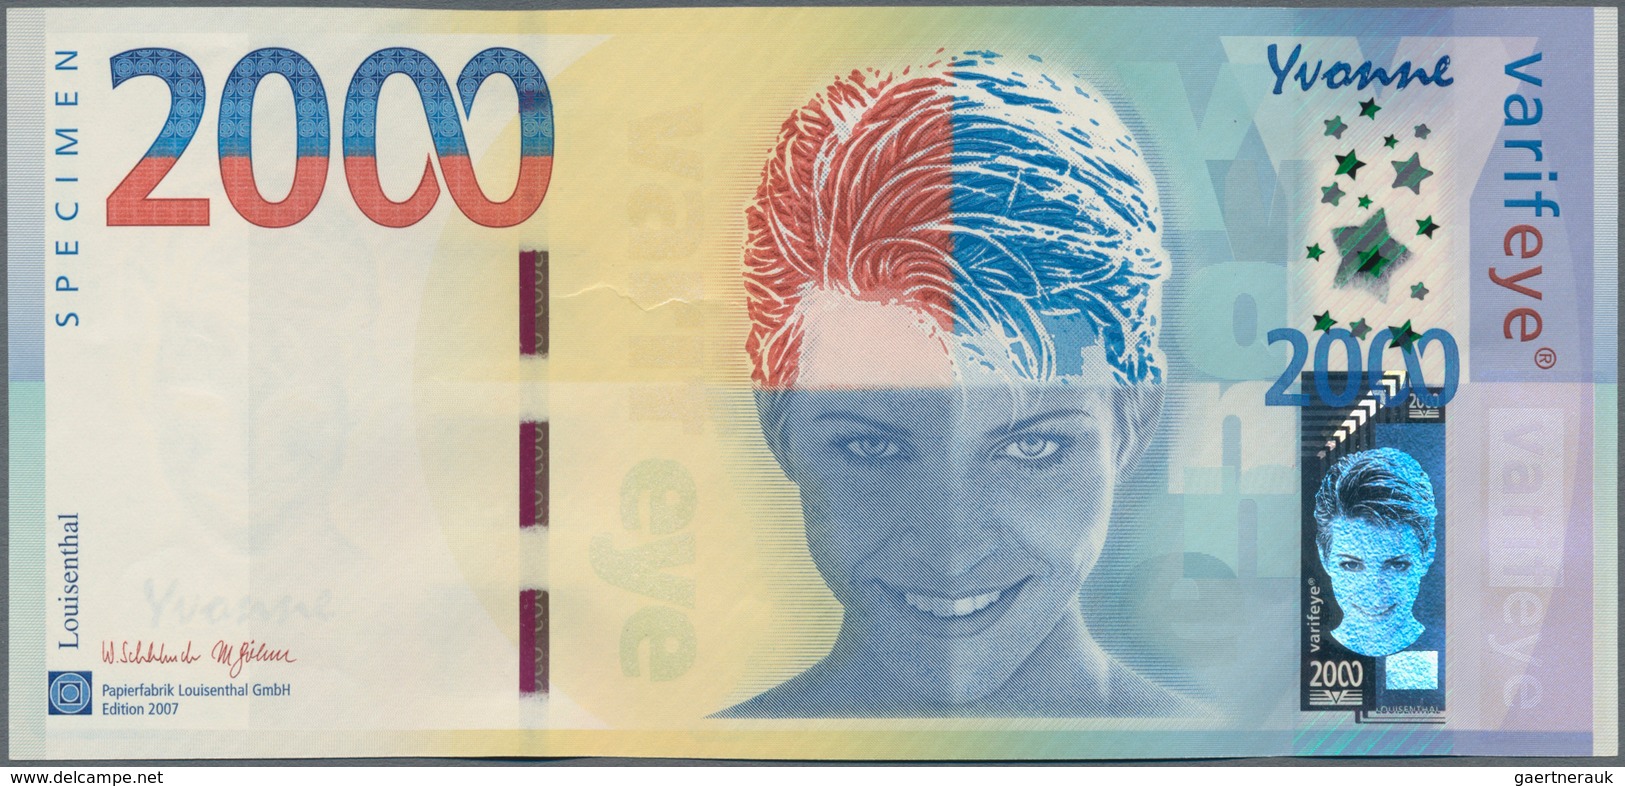 Testbanknoten: Test Note GIESECKE & DEVRIENT / LOUISENTHAL Germany, "Yvonne 2007" Featuring A Broad - Specimen